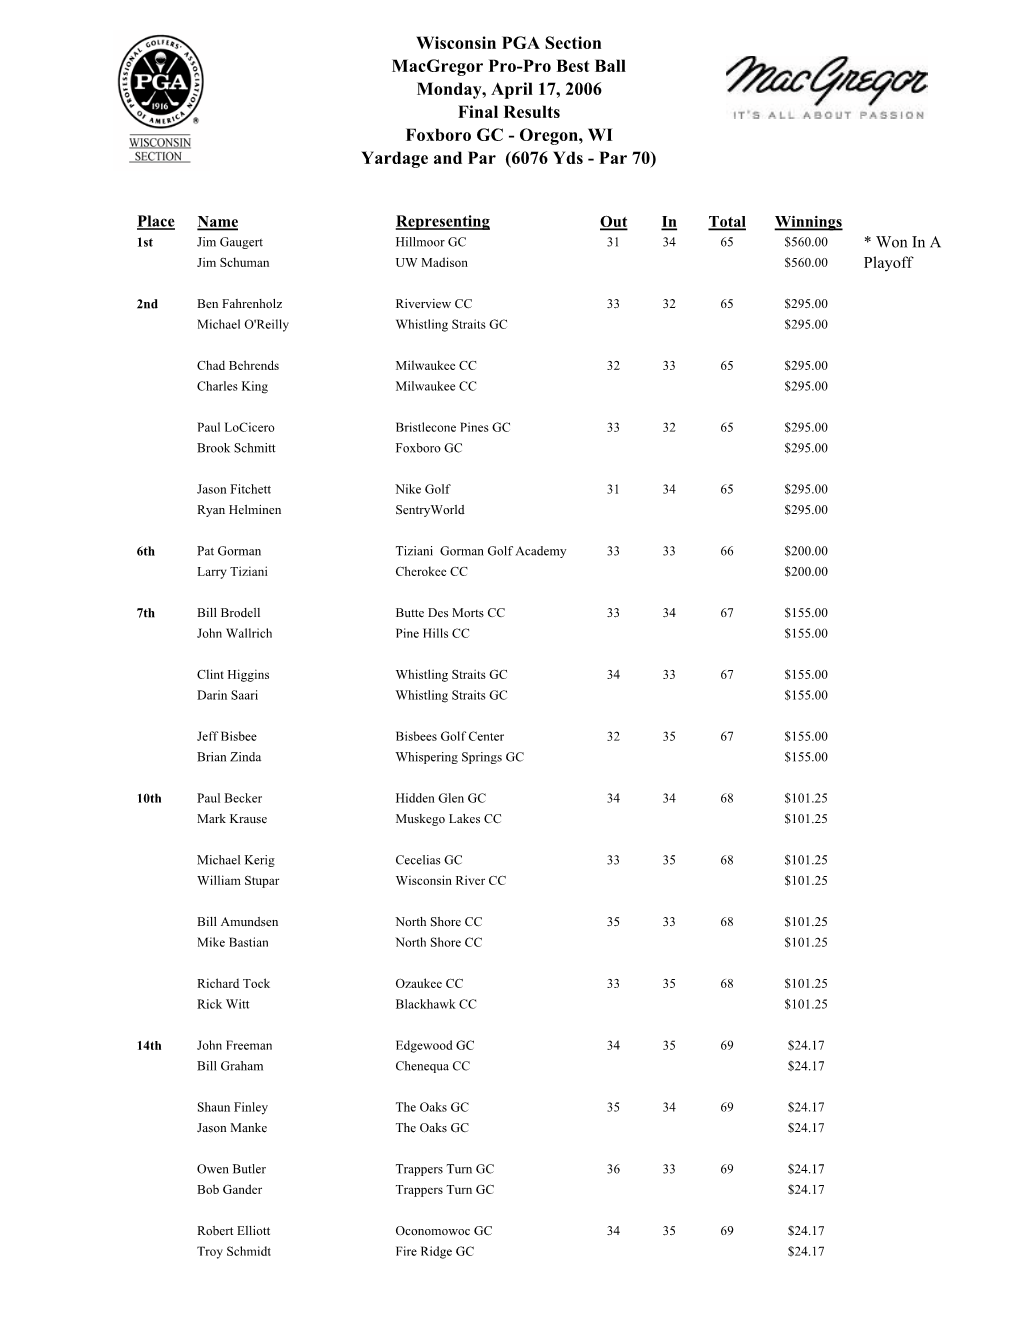 2006 Tournament Results(Pdf)